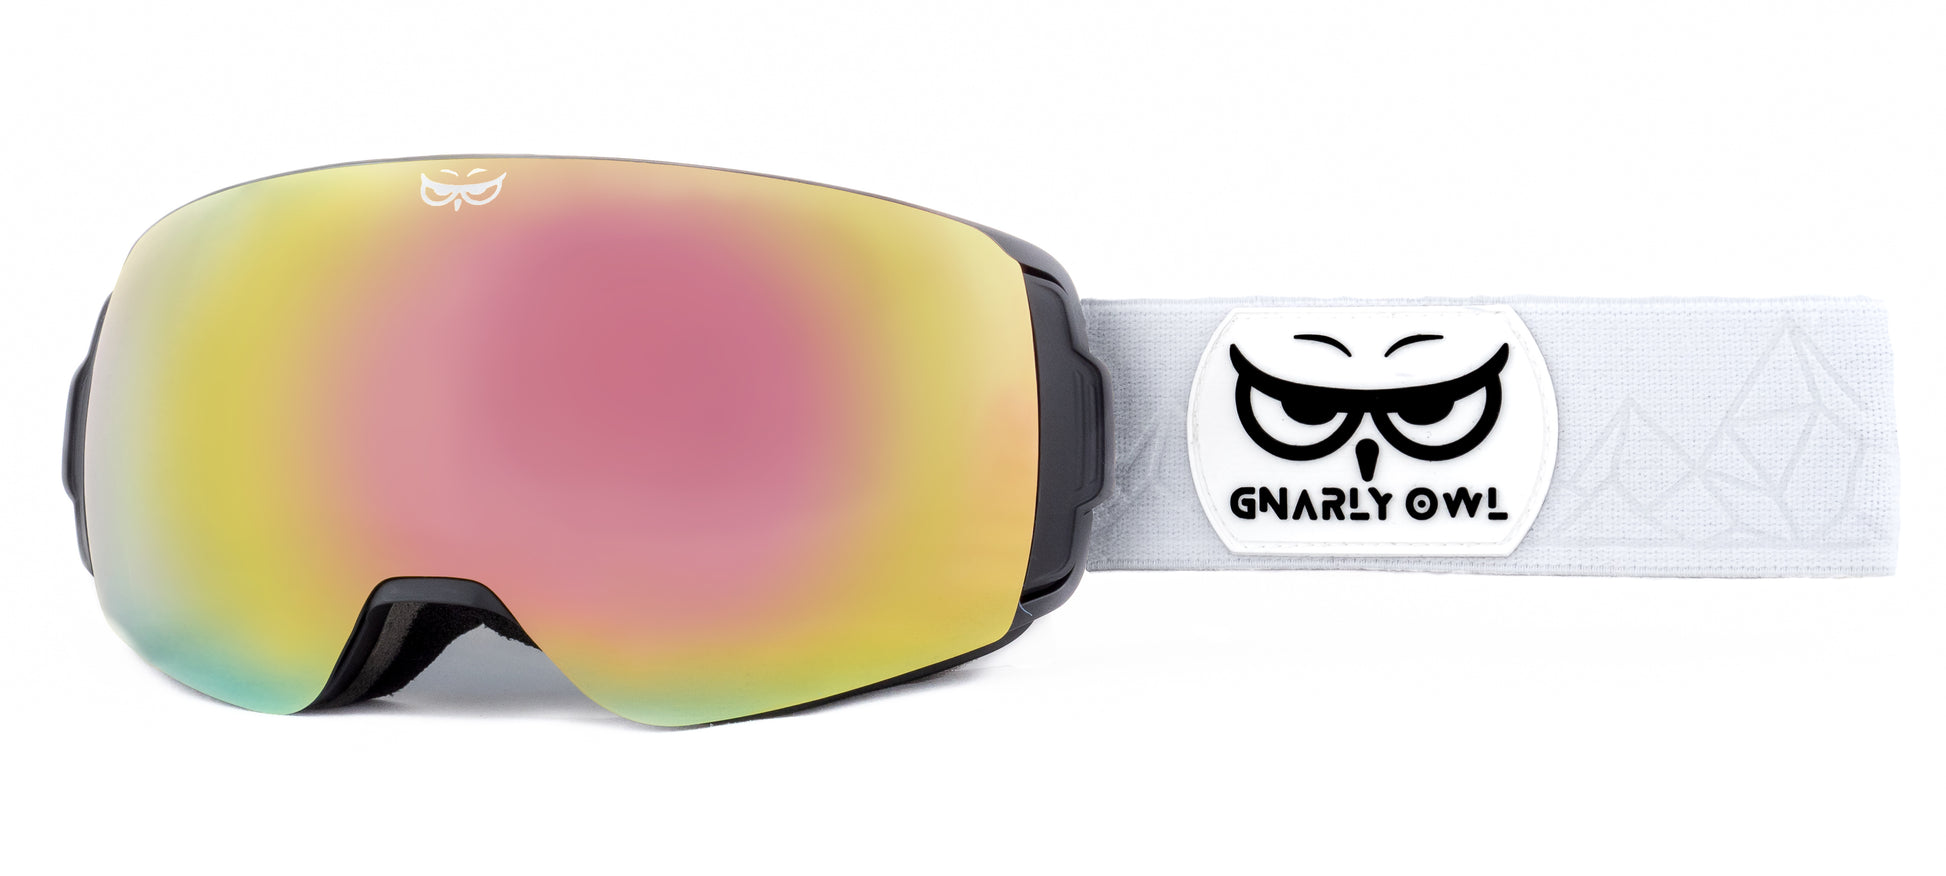 Gnarly Owl polarizační lyžařské snowboardové skialpové splitboardové brýle česká značka růžový REVO zorník bílý pásek dámské pánské brýle malý obličej magnetické zorníky